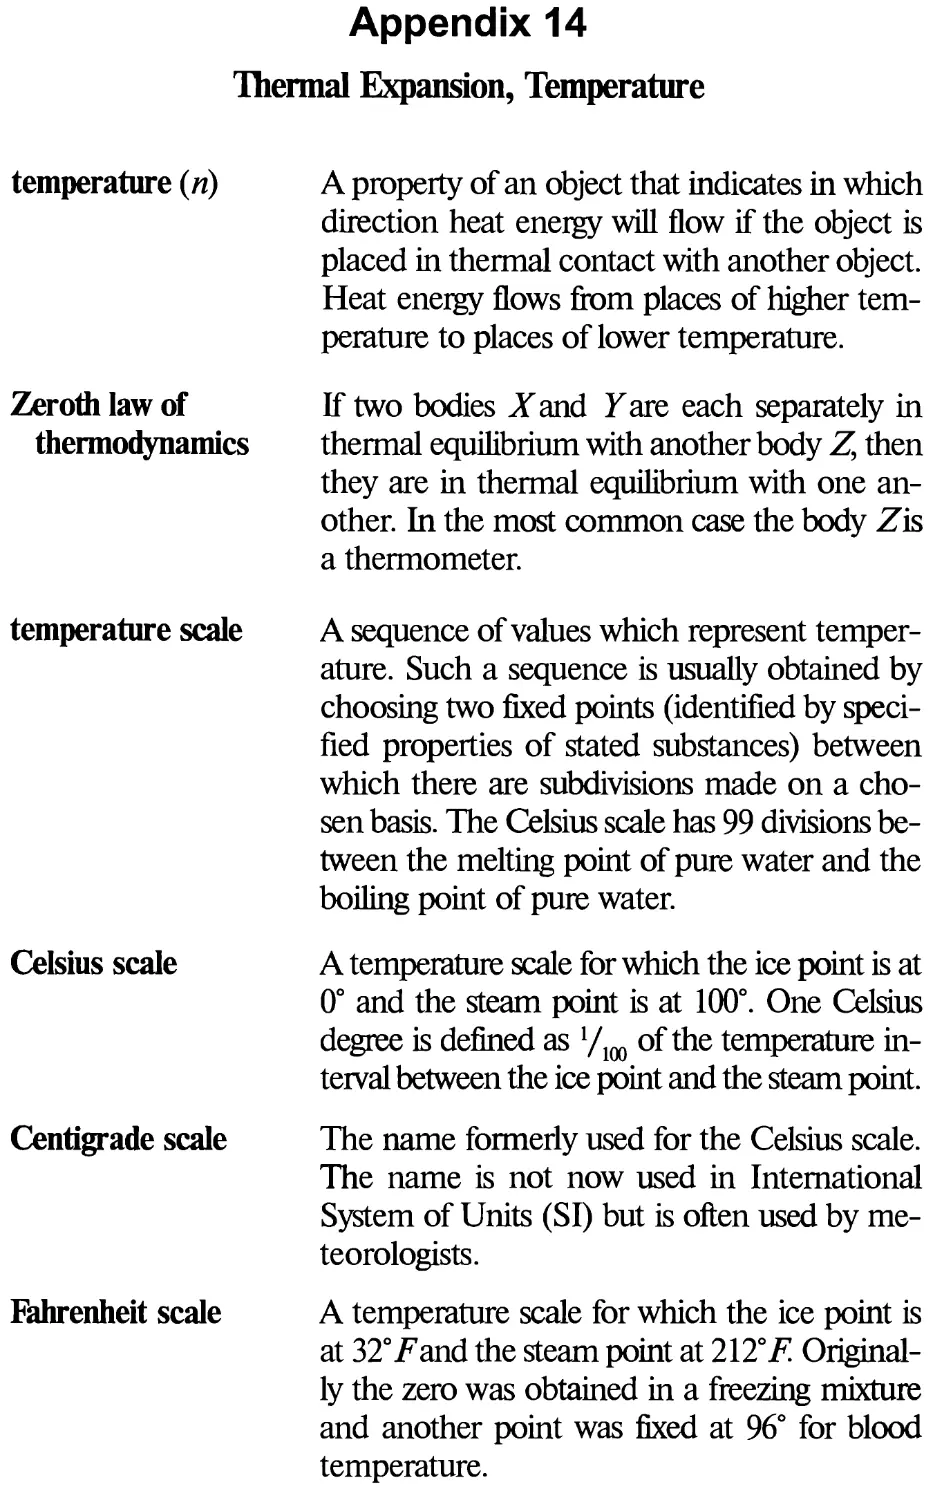 Appendix 14. Thermal Expansion, Temperature